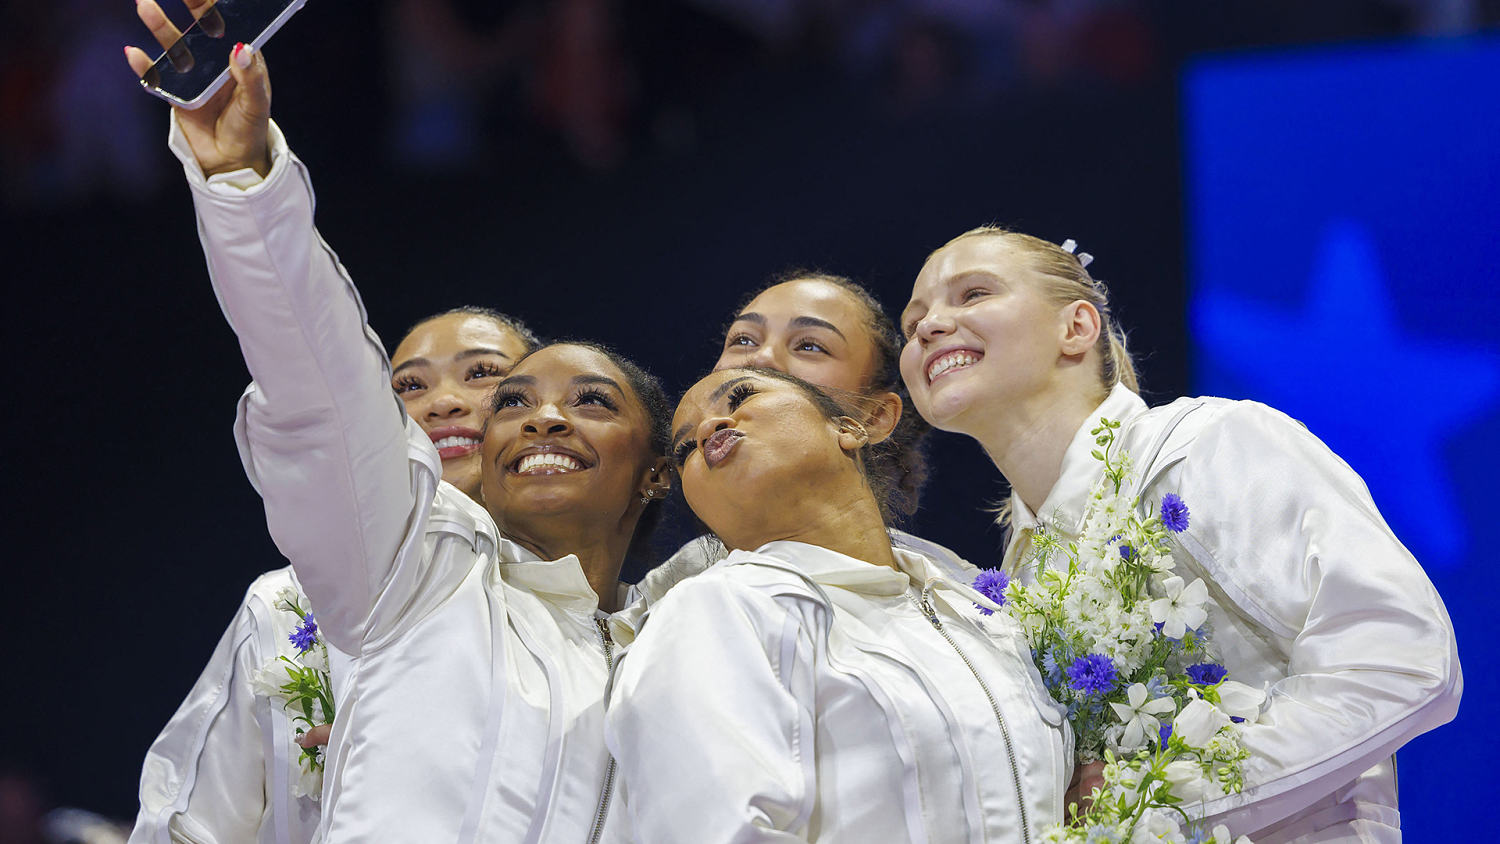 Watch: U.S. women's gymnastics team presented ahead of Paris